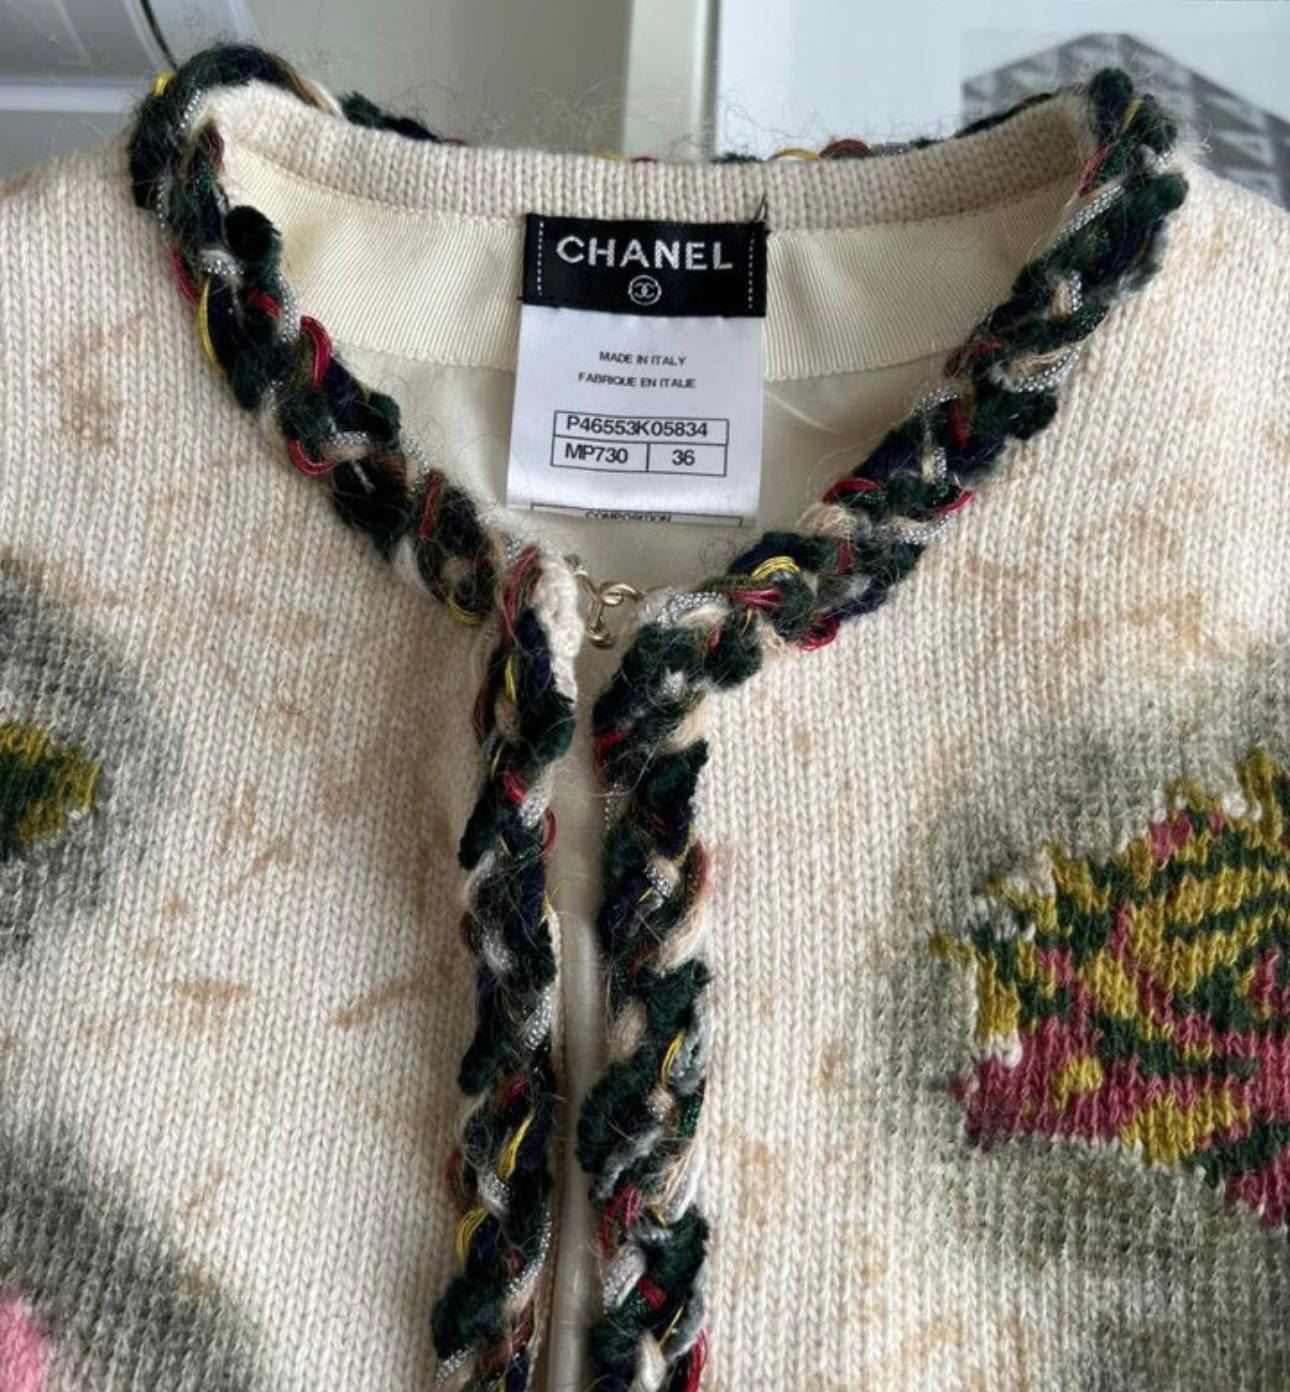 Chanel Paris / Edinburgh Runway Floral Knit Jacket 9